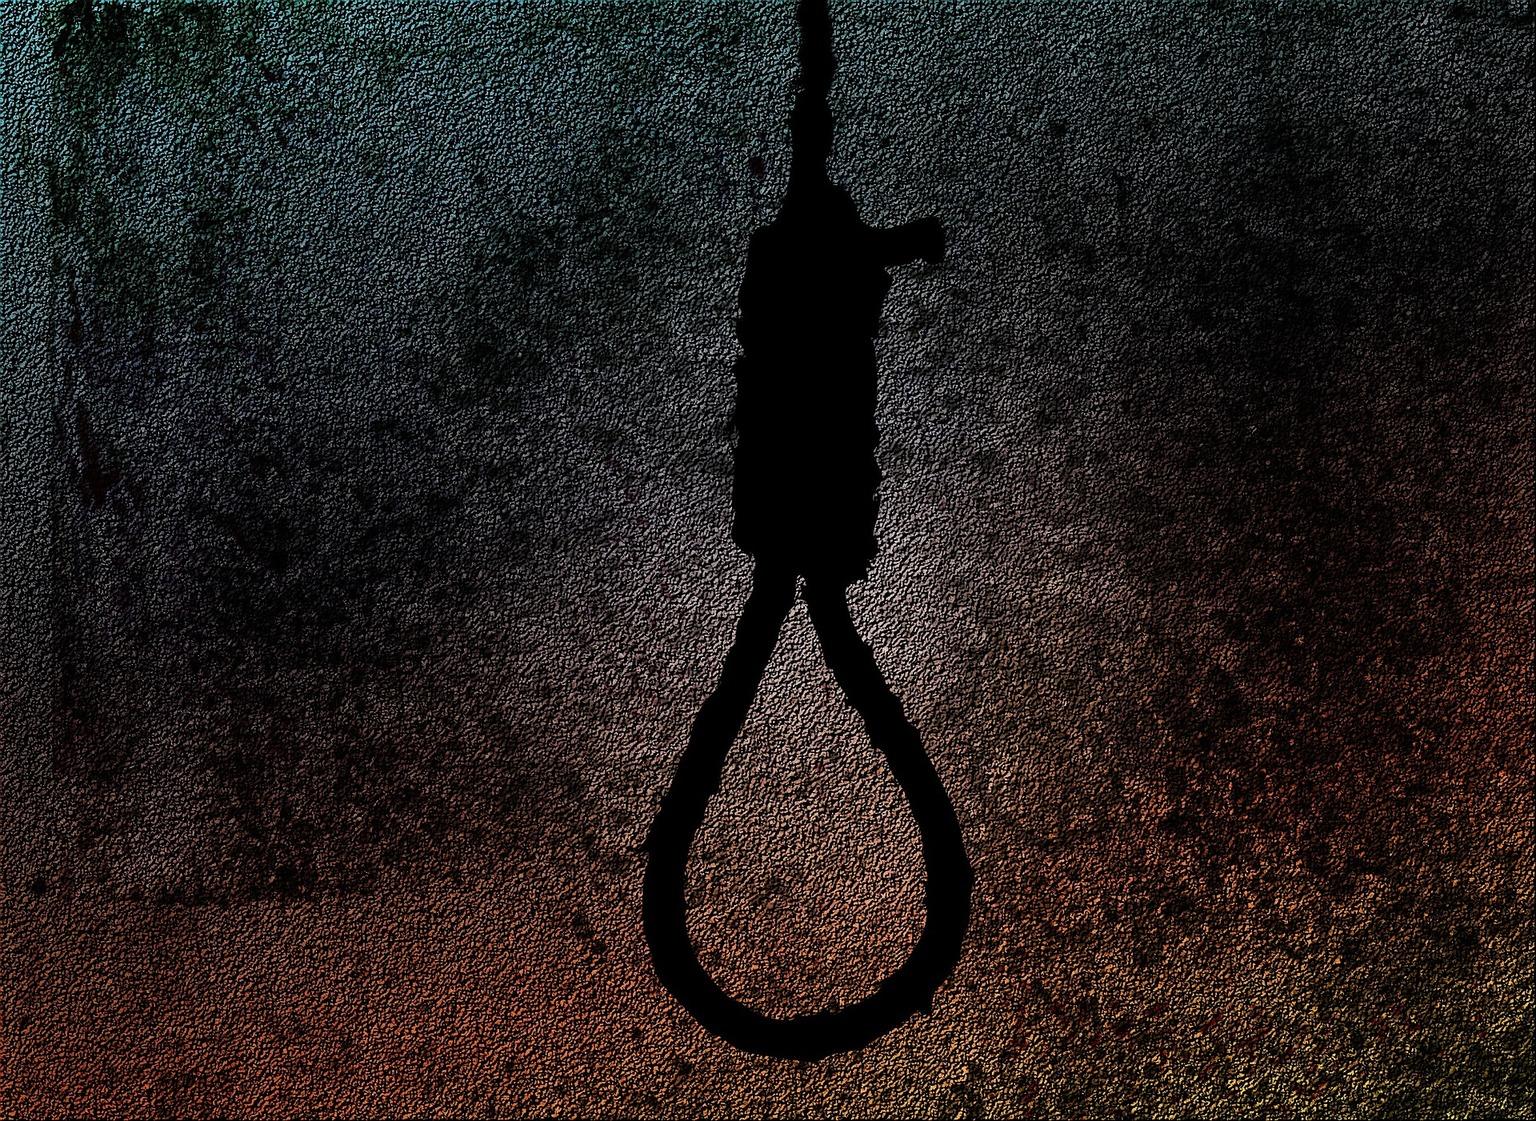 Unser Engagement • Initiative gegen die Todesstrafe e.V.